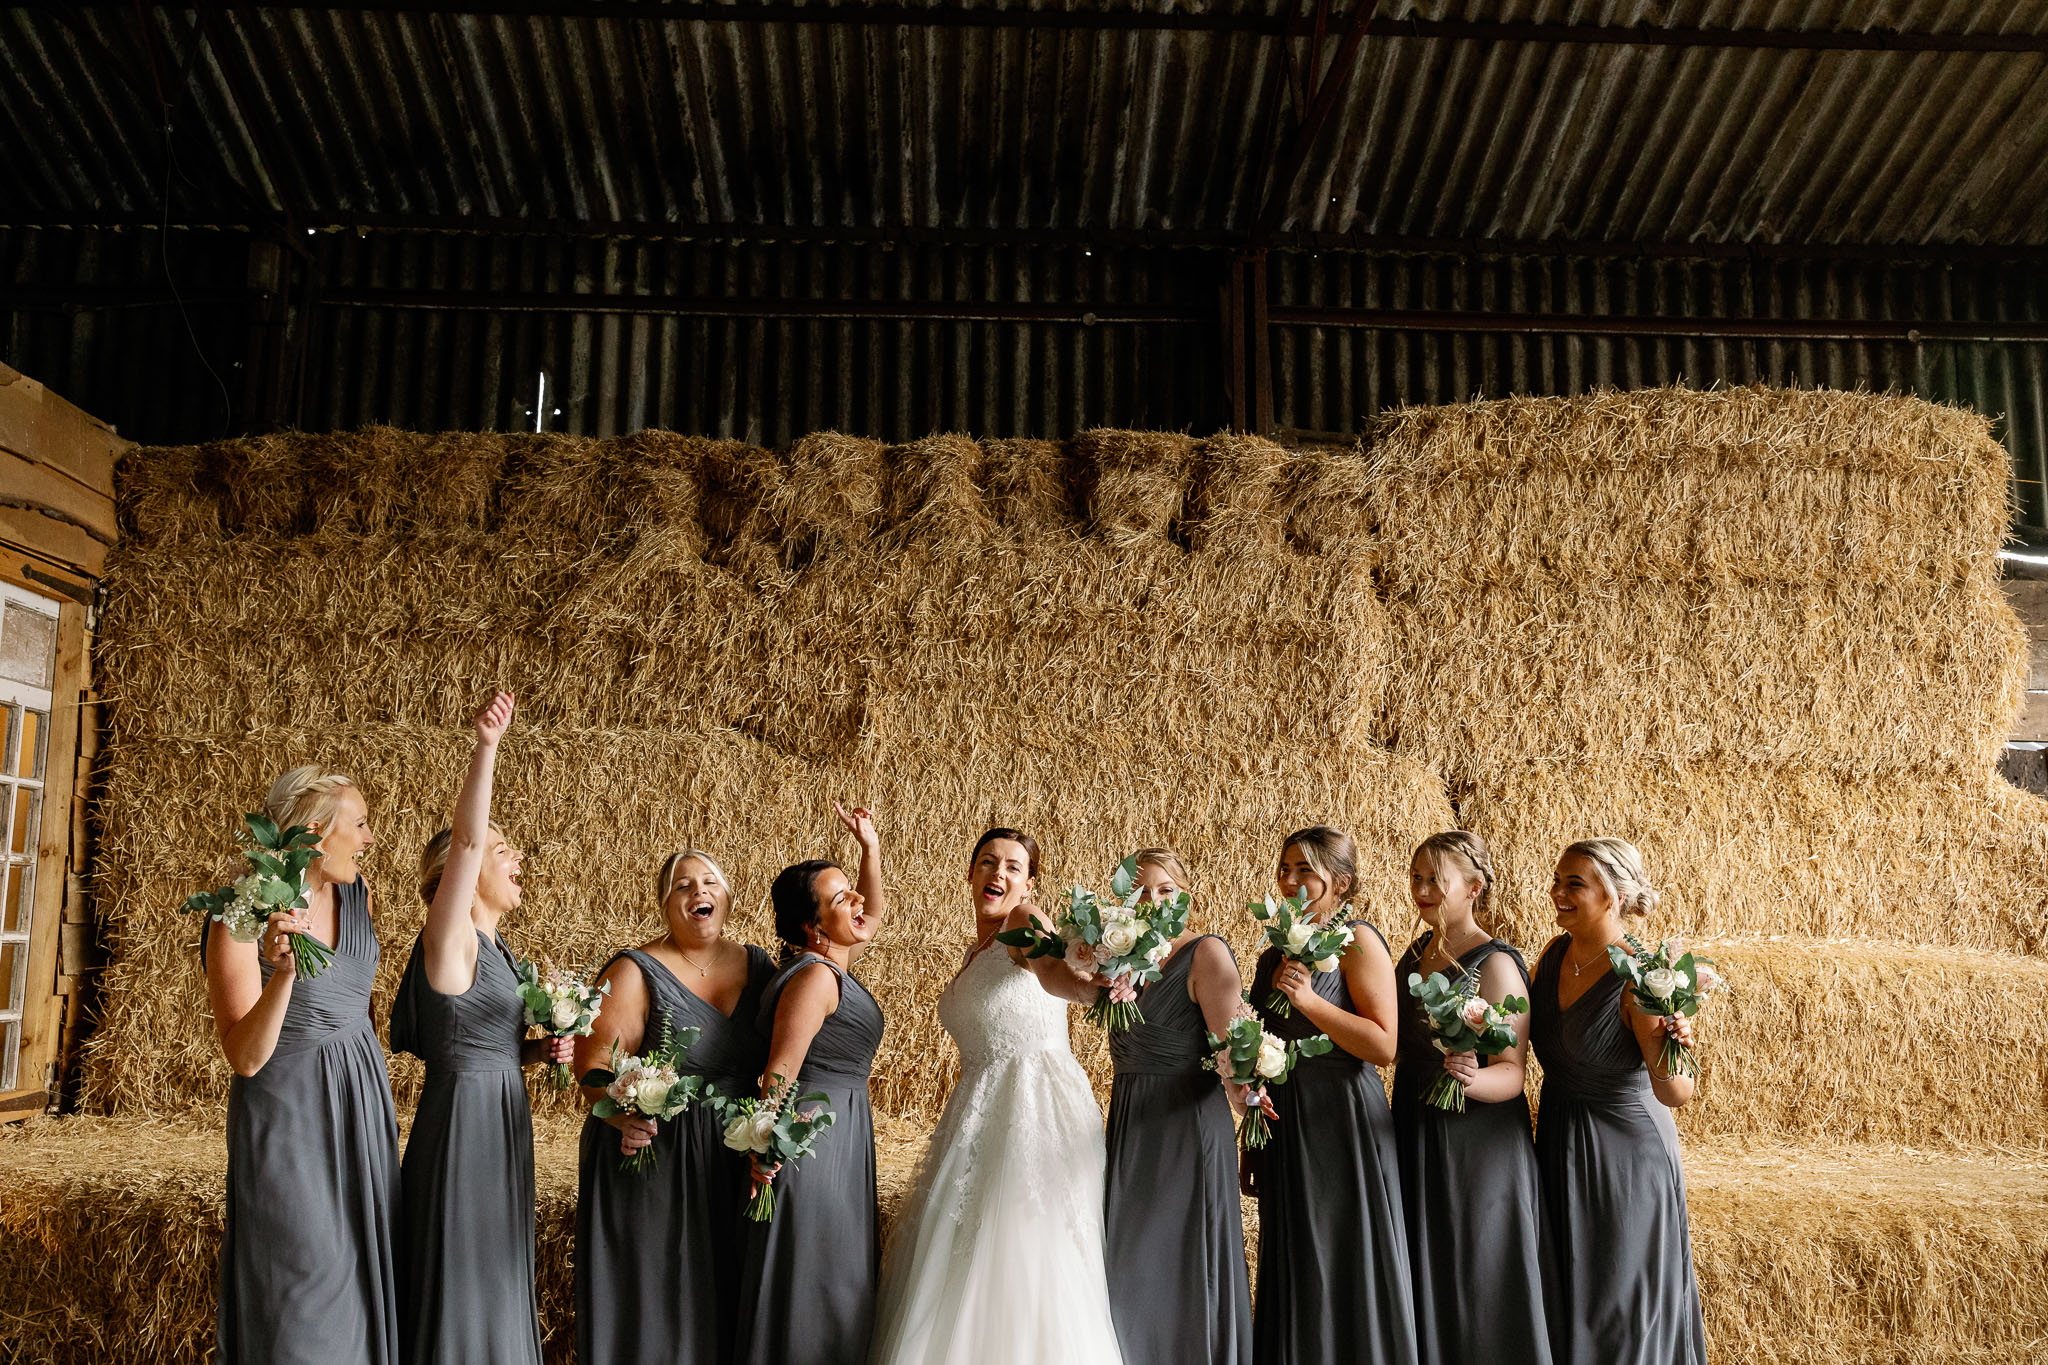 Fun Bridal Pictures at Owen house Wedding Barn